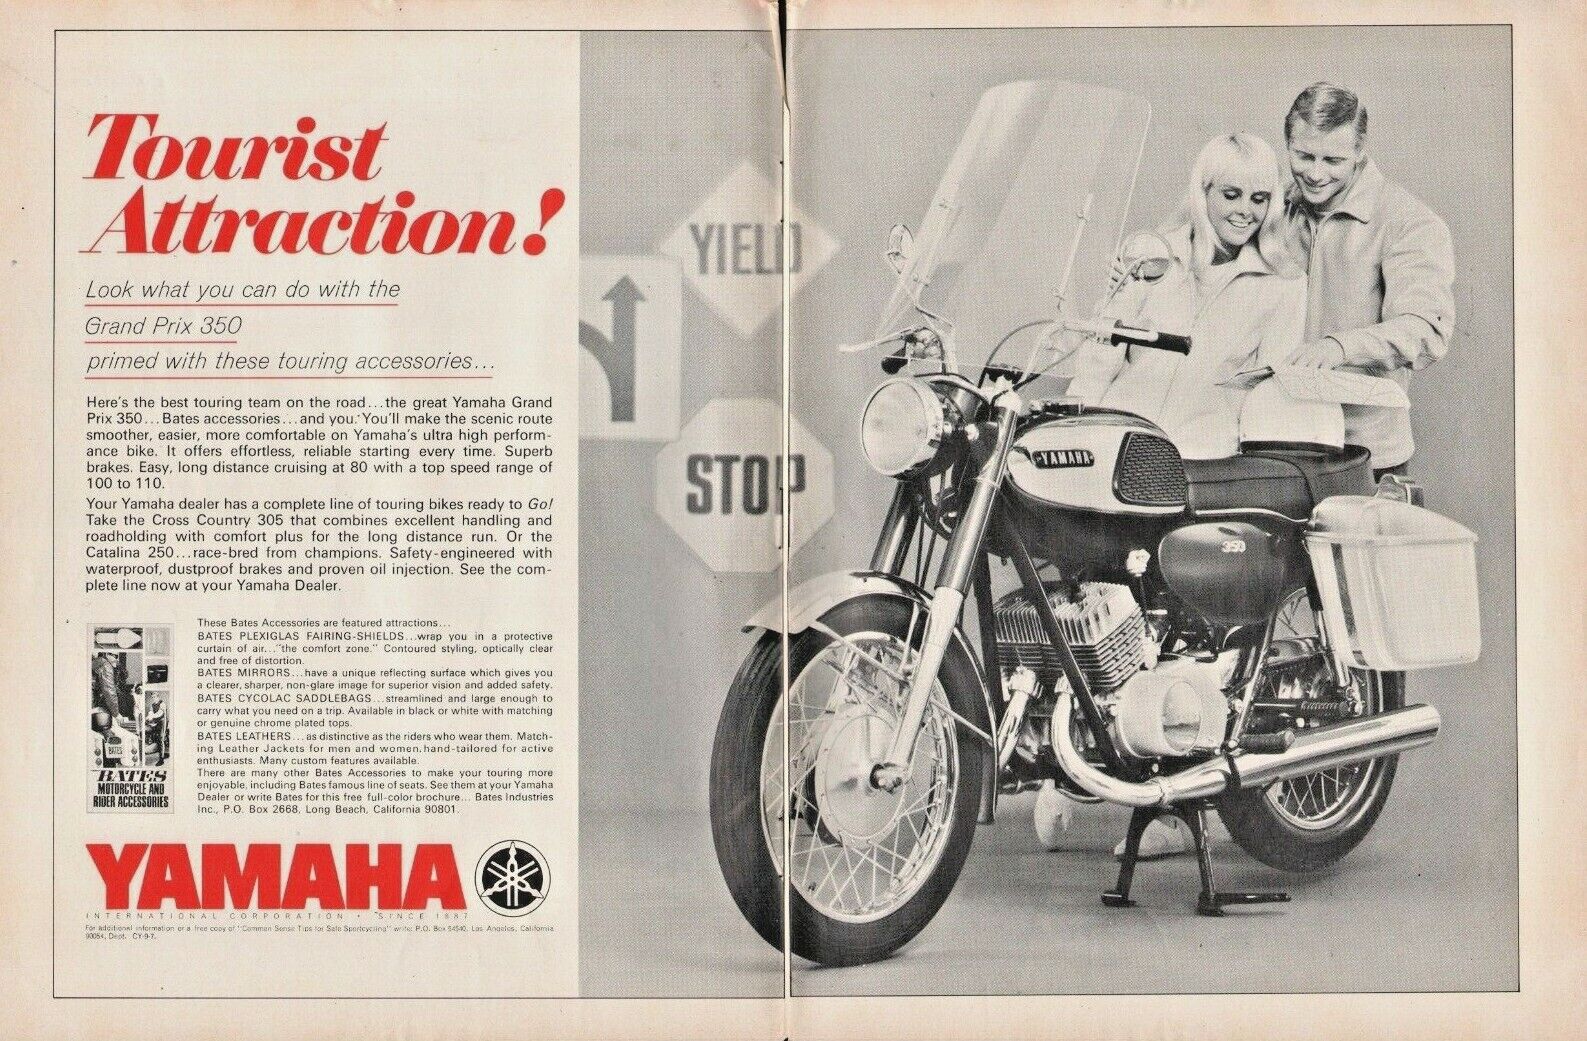 1967 Yamaha Grand Prix 350 - 2-Page Vintage Motorcycle Ad